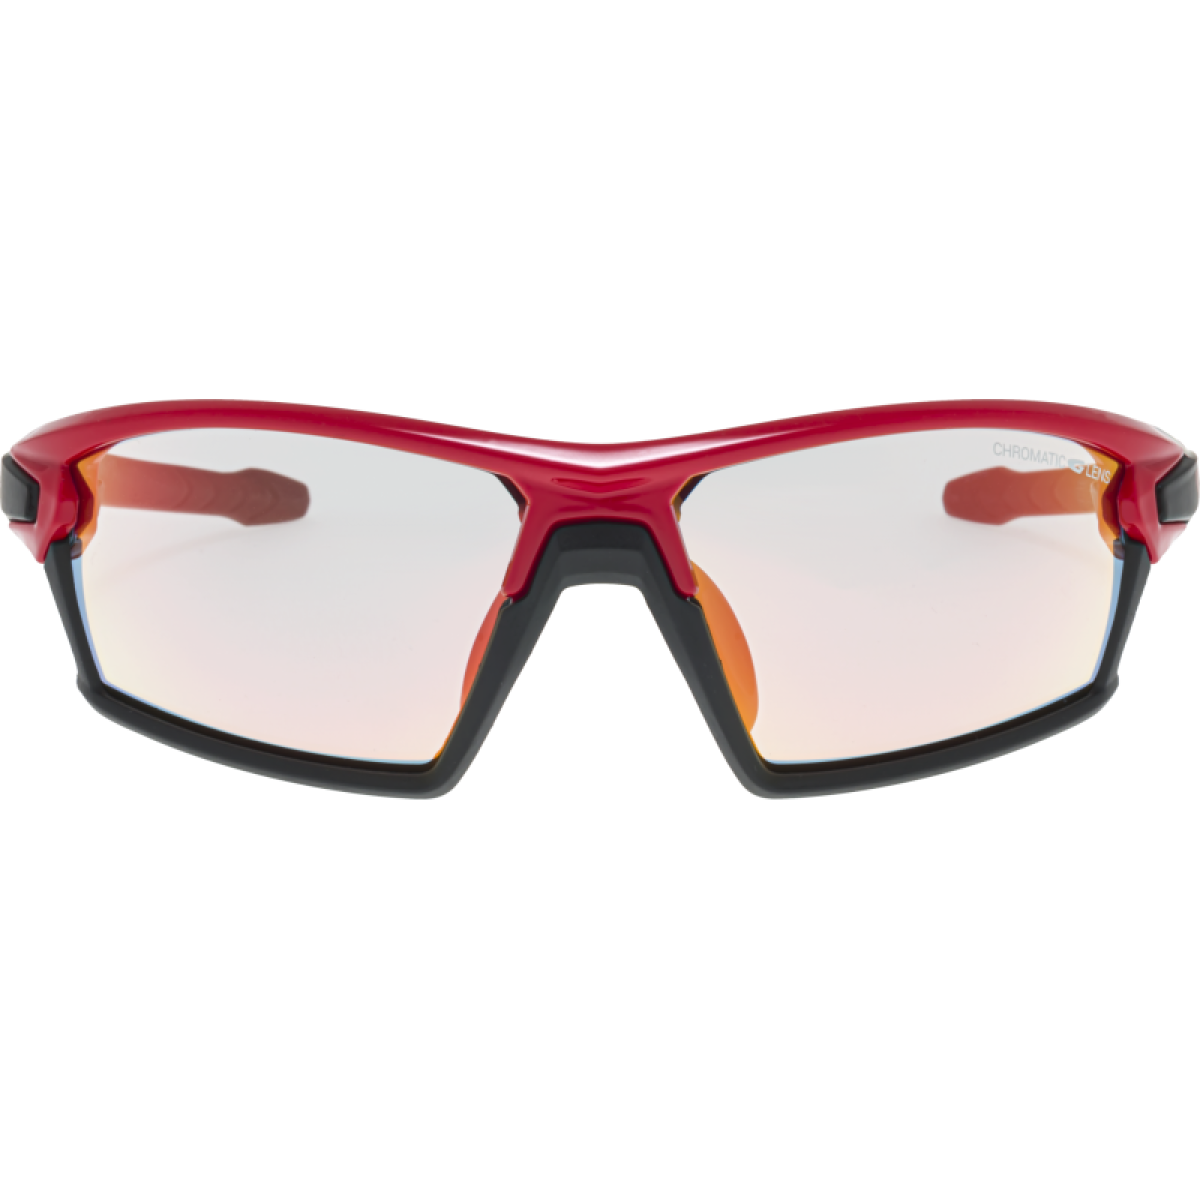 Photochromatic sunglasses  E559-4 GOG - view 3